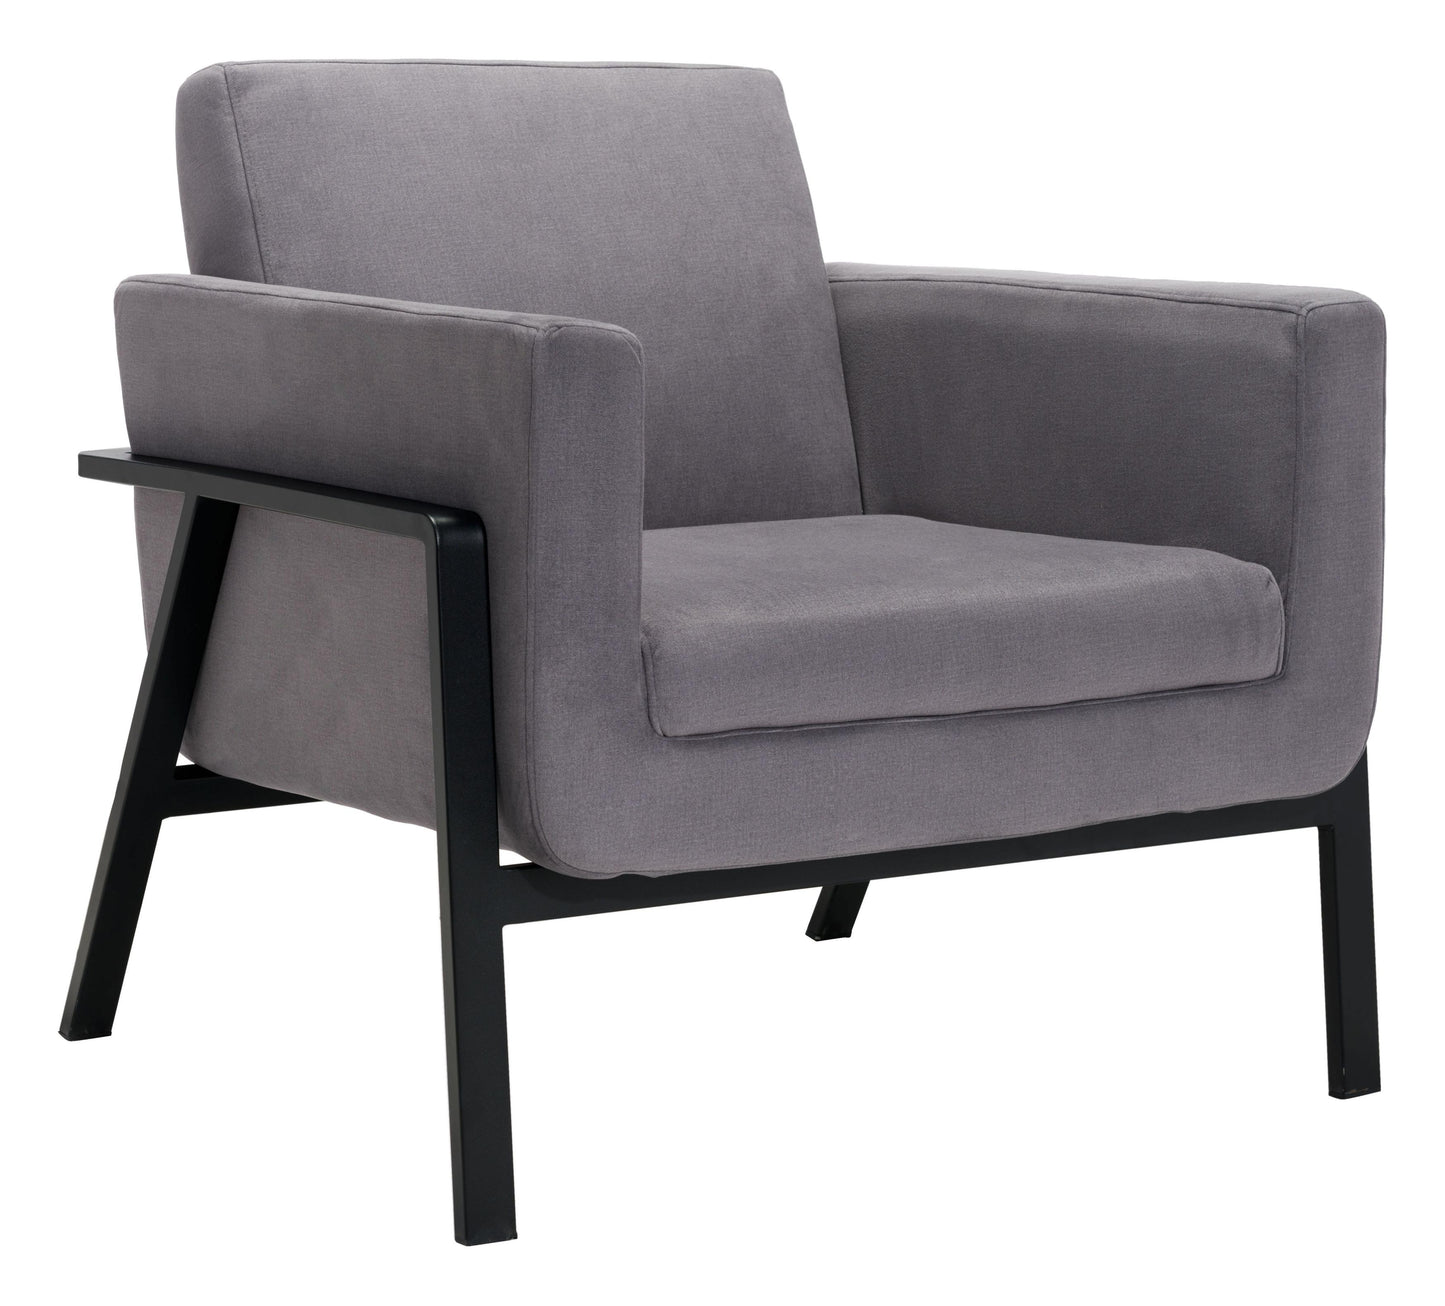 Homestead Lounge Chair Gray